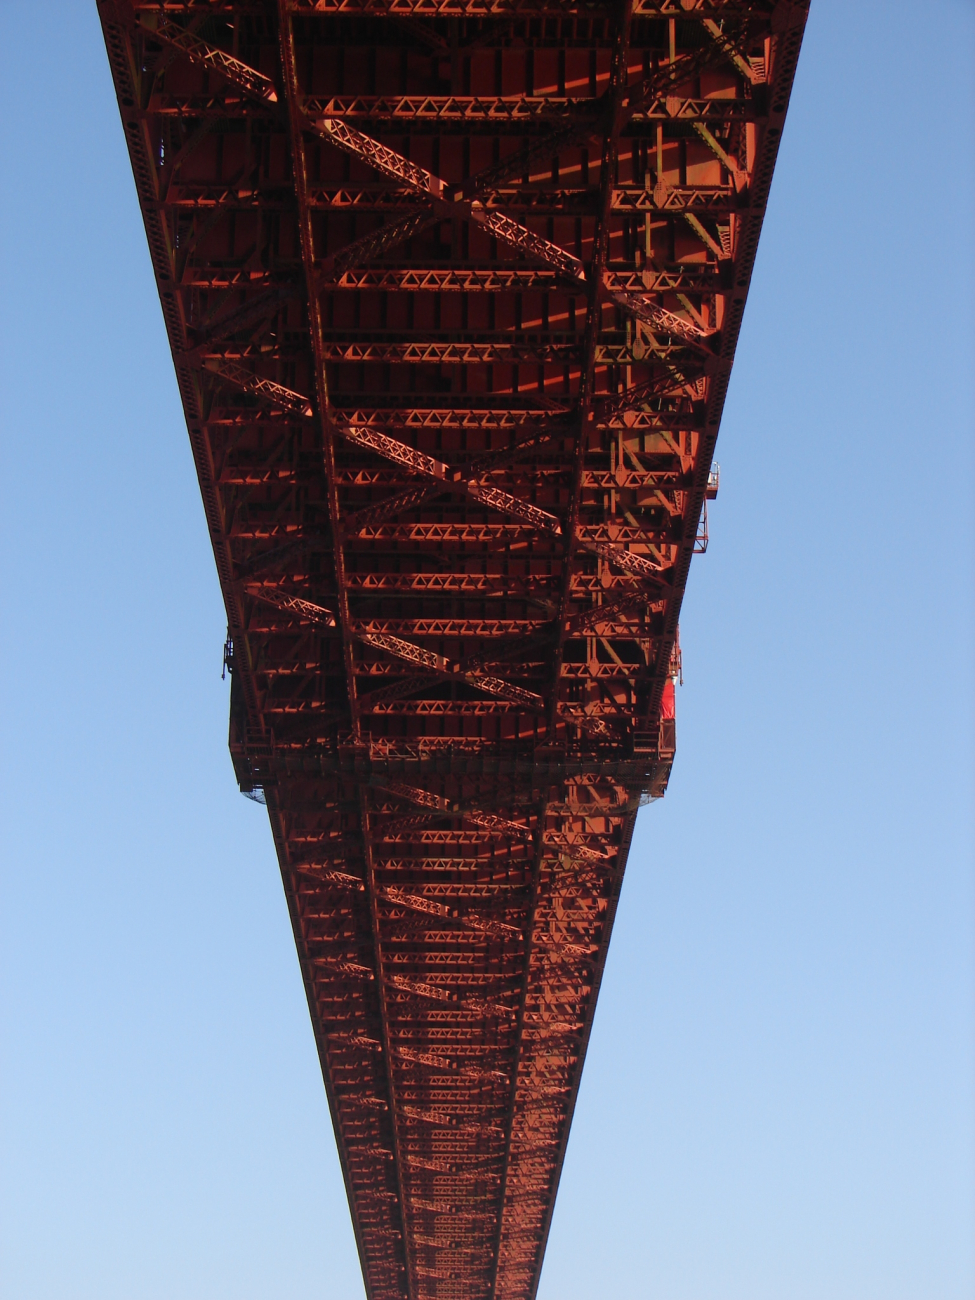 Directly under the Golden Gate Bridge